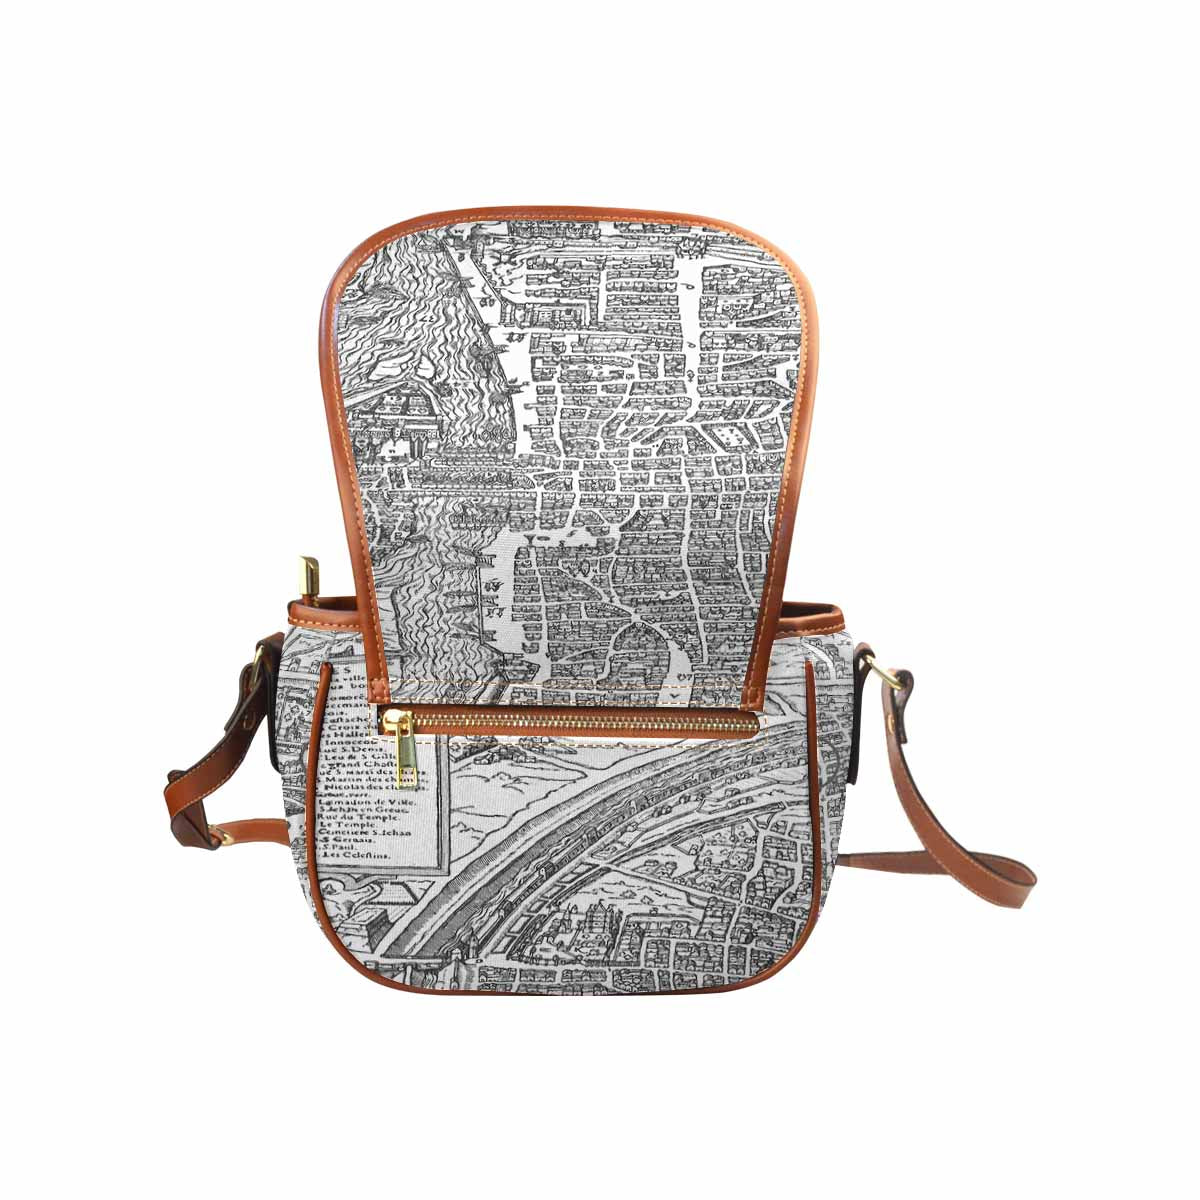 Antique Map design Handbag, saddle bag, Design 47